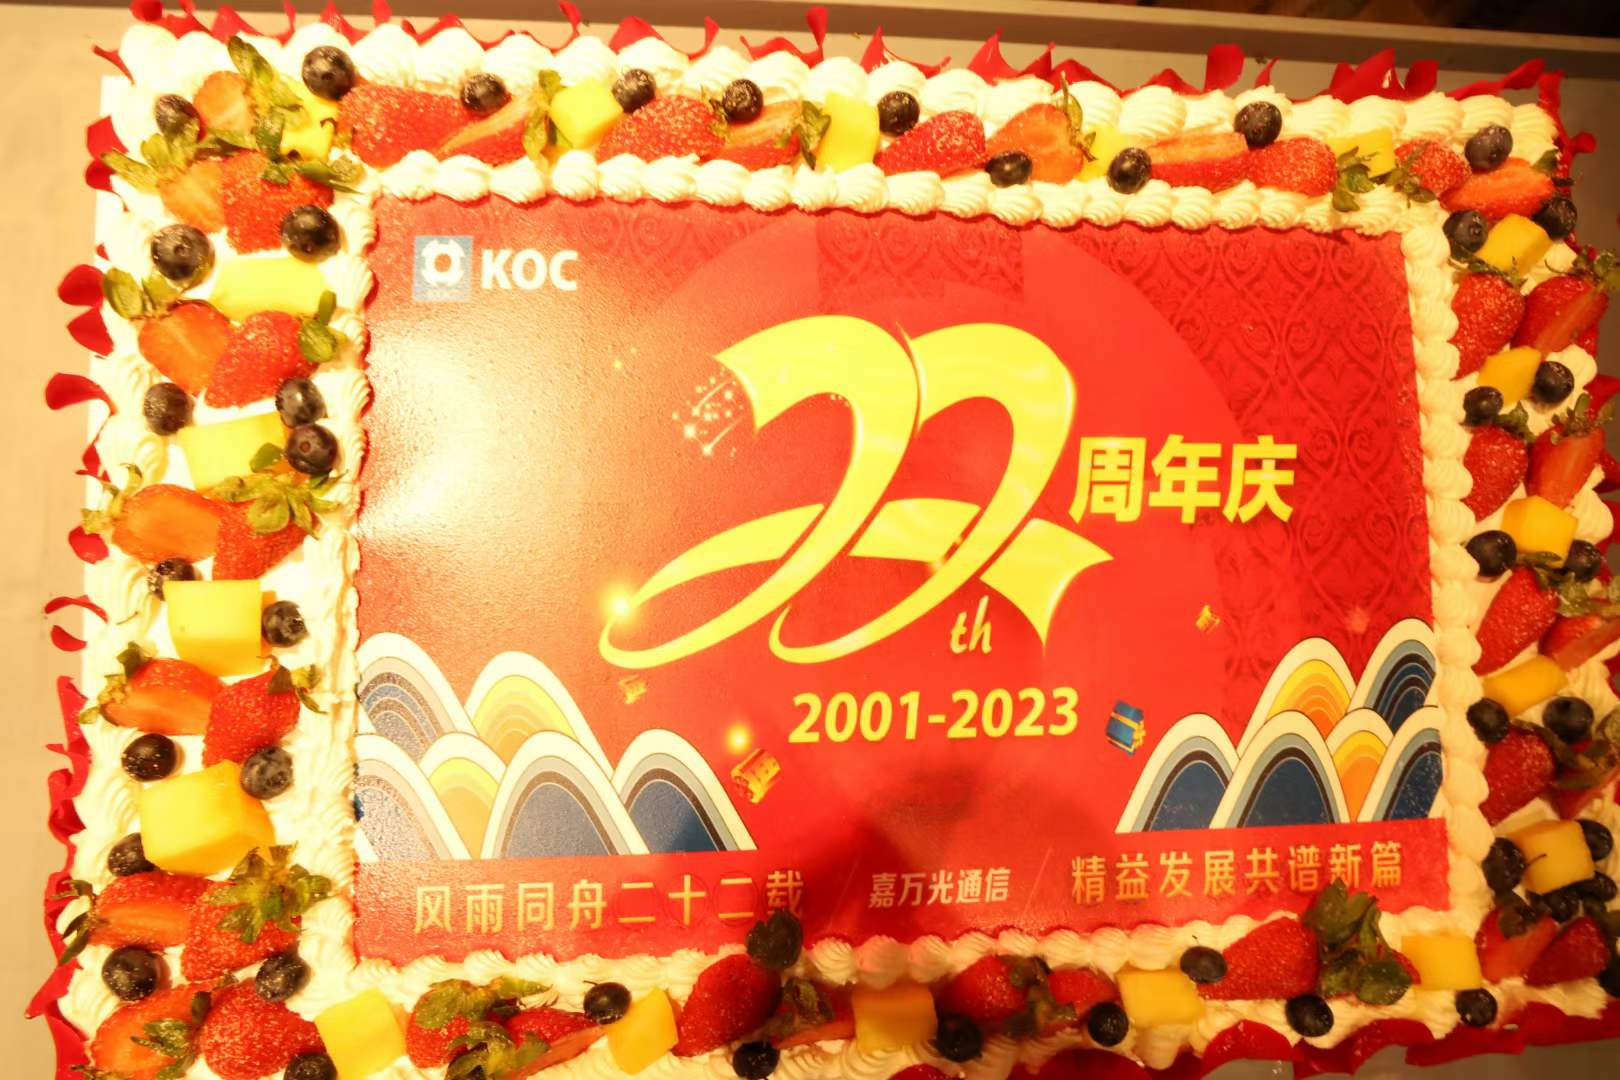 22th Anniversary Celebration